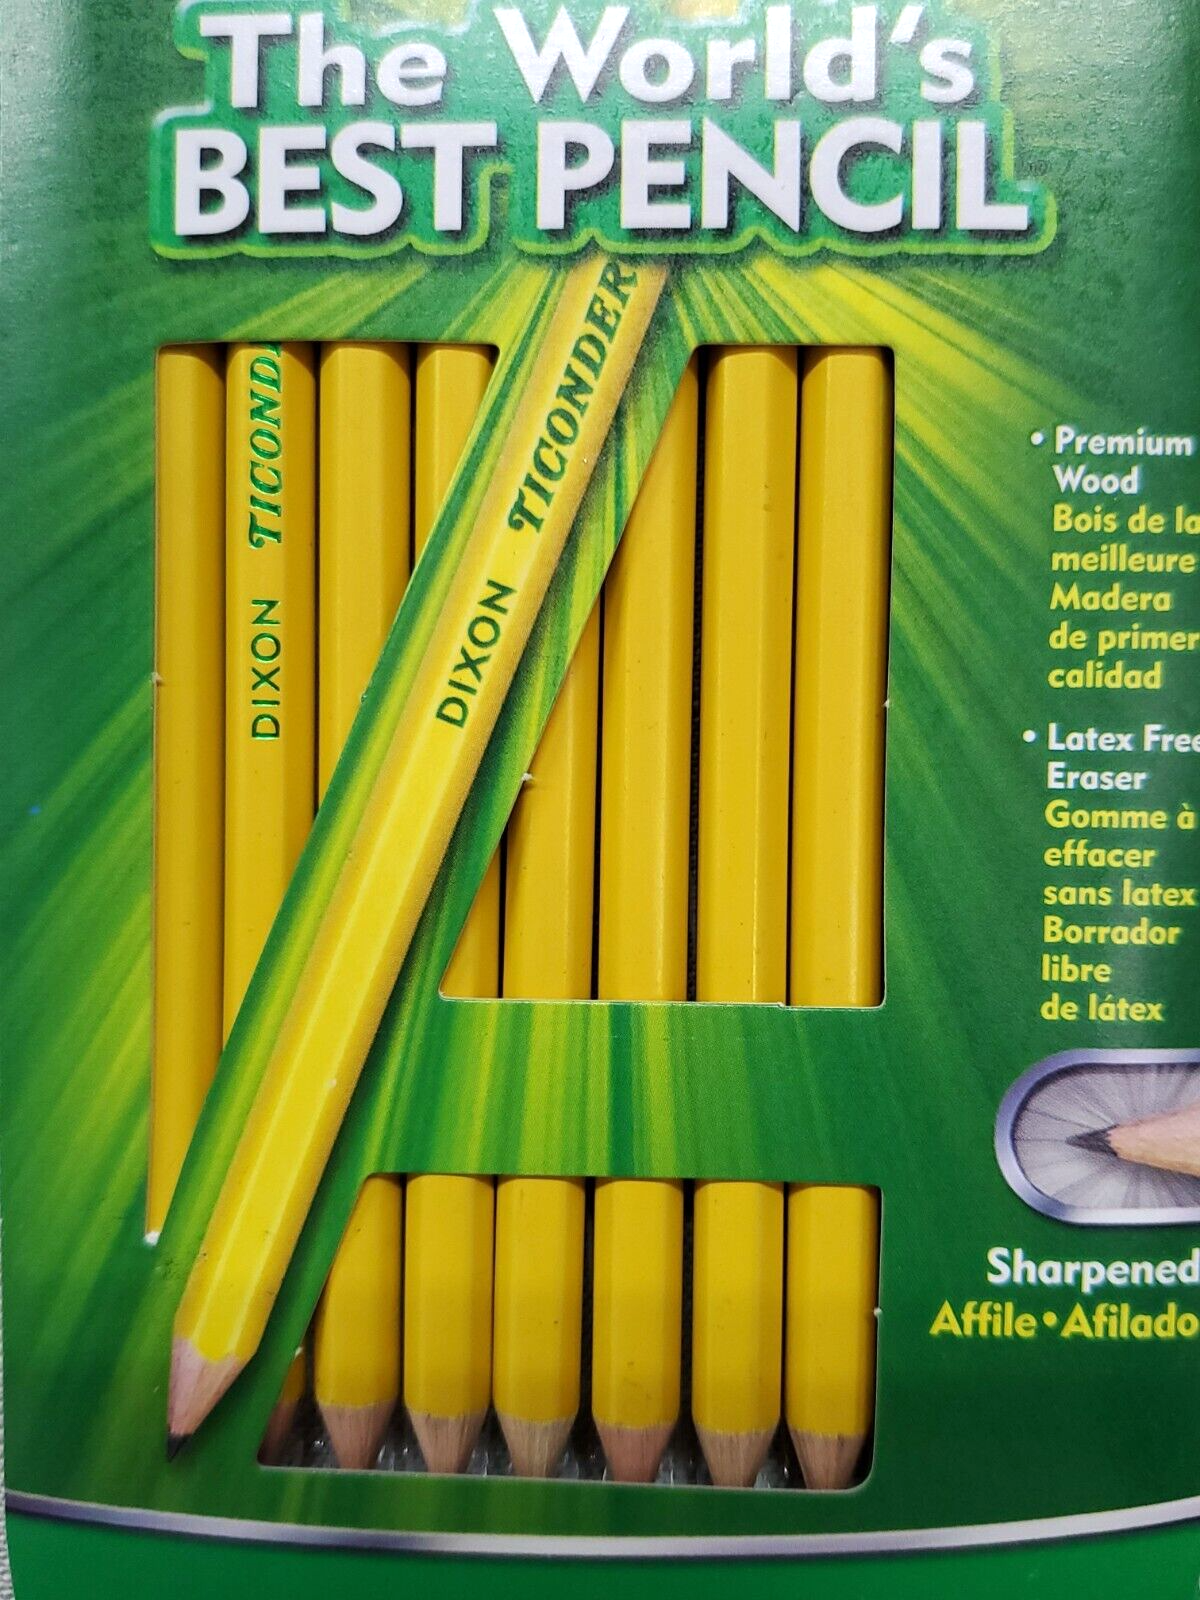 TICONDEROGA Pencils, Wood-Cased, Pre-Sharpened, Graphite #2 HB Soft,  Yellow, 10